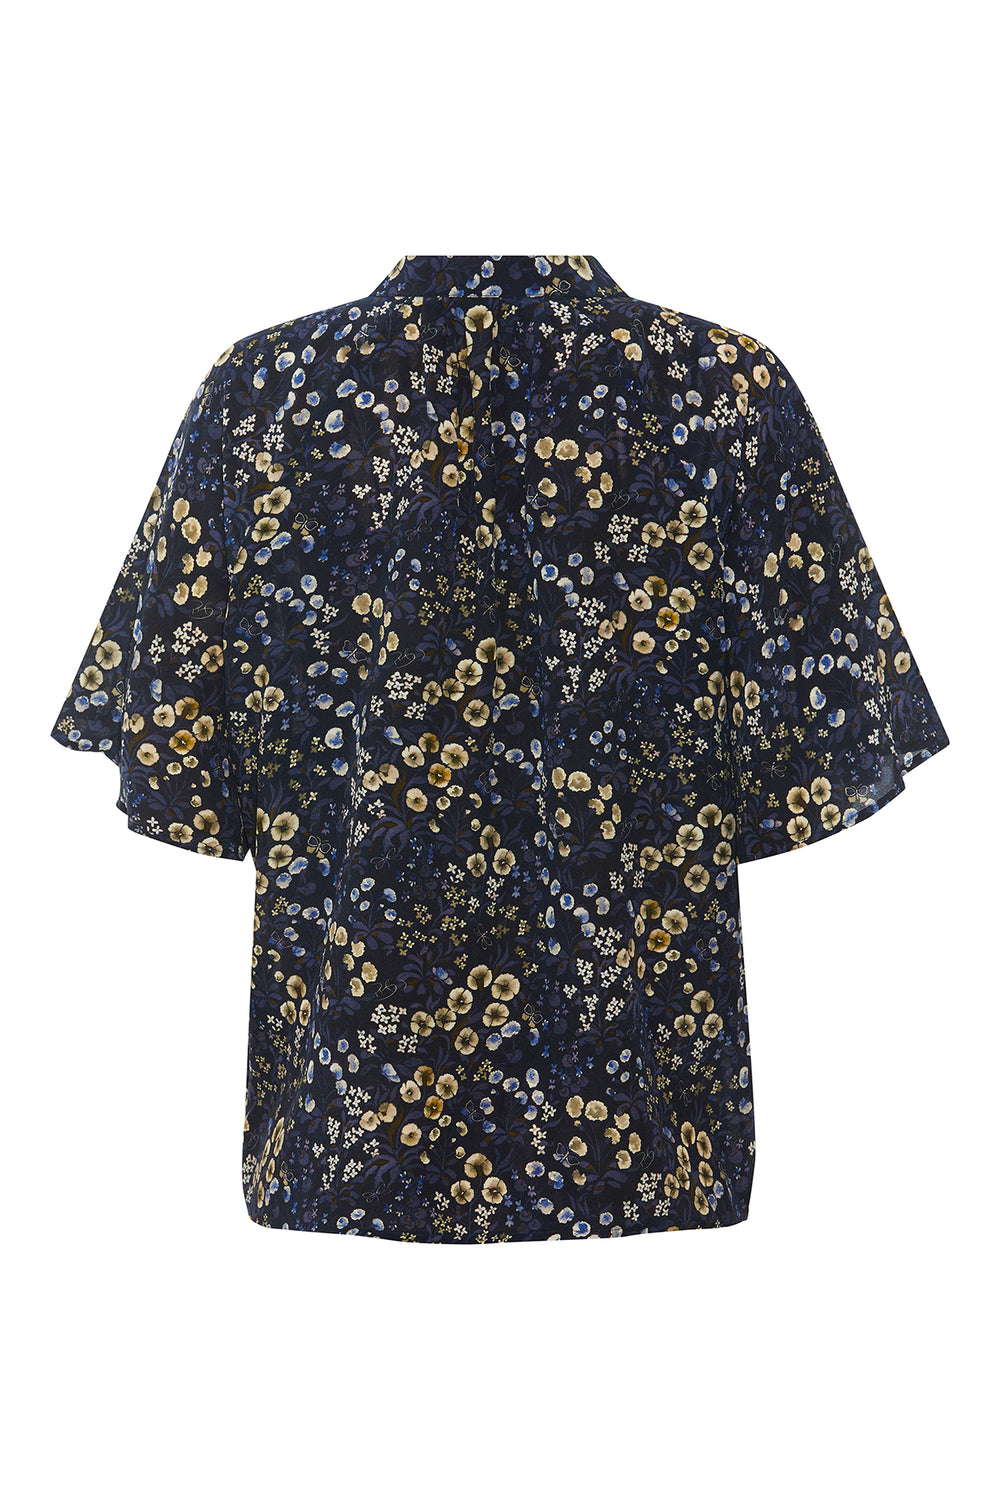 PBO Opala blouse BLOUSE 687 Dark flower print